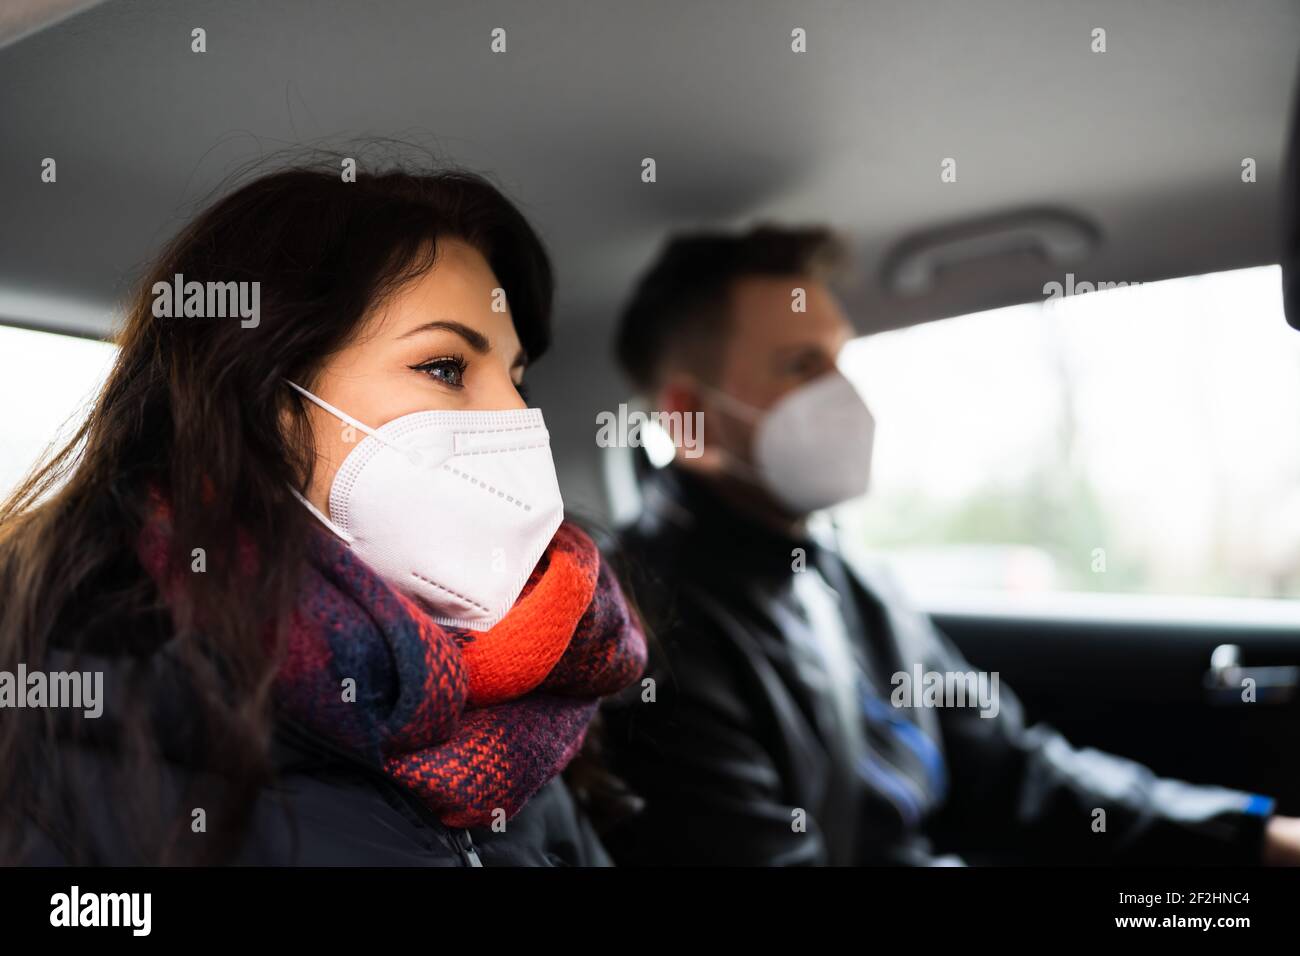 Carpool Car Ride Share Service In Gesichtsmaske Stockfoto